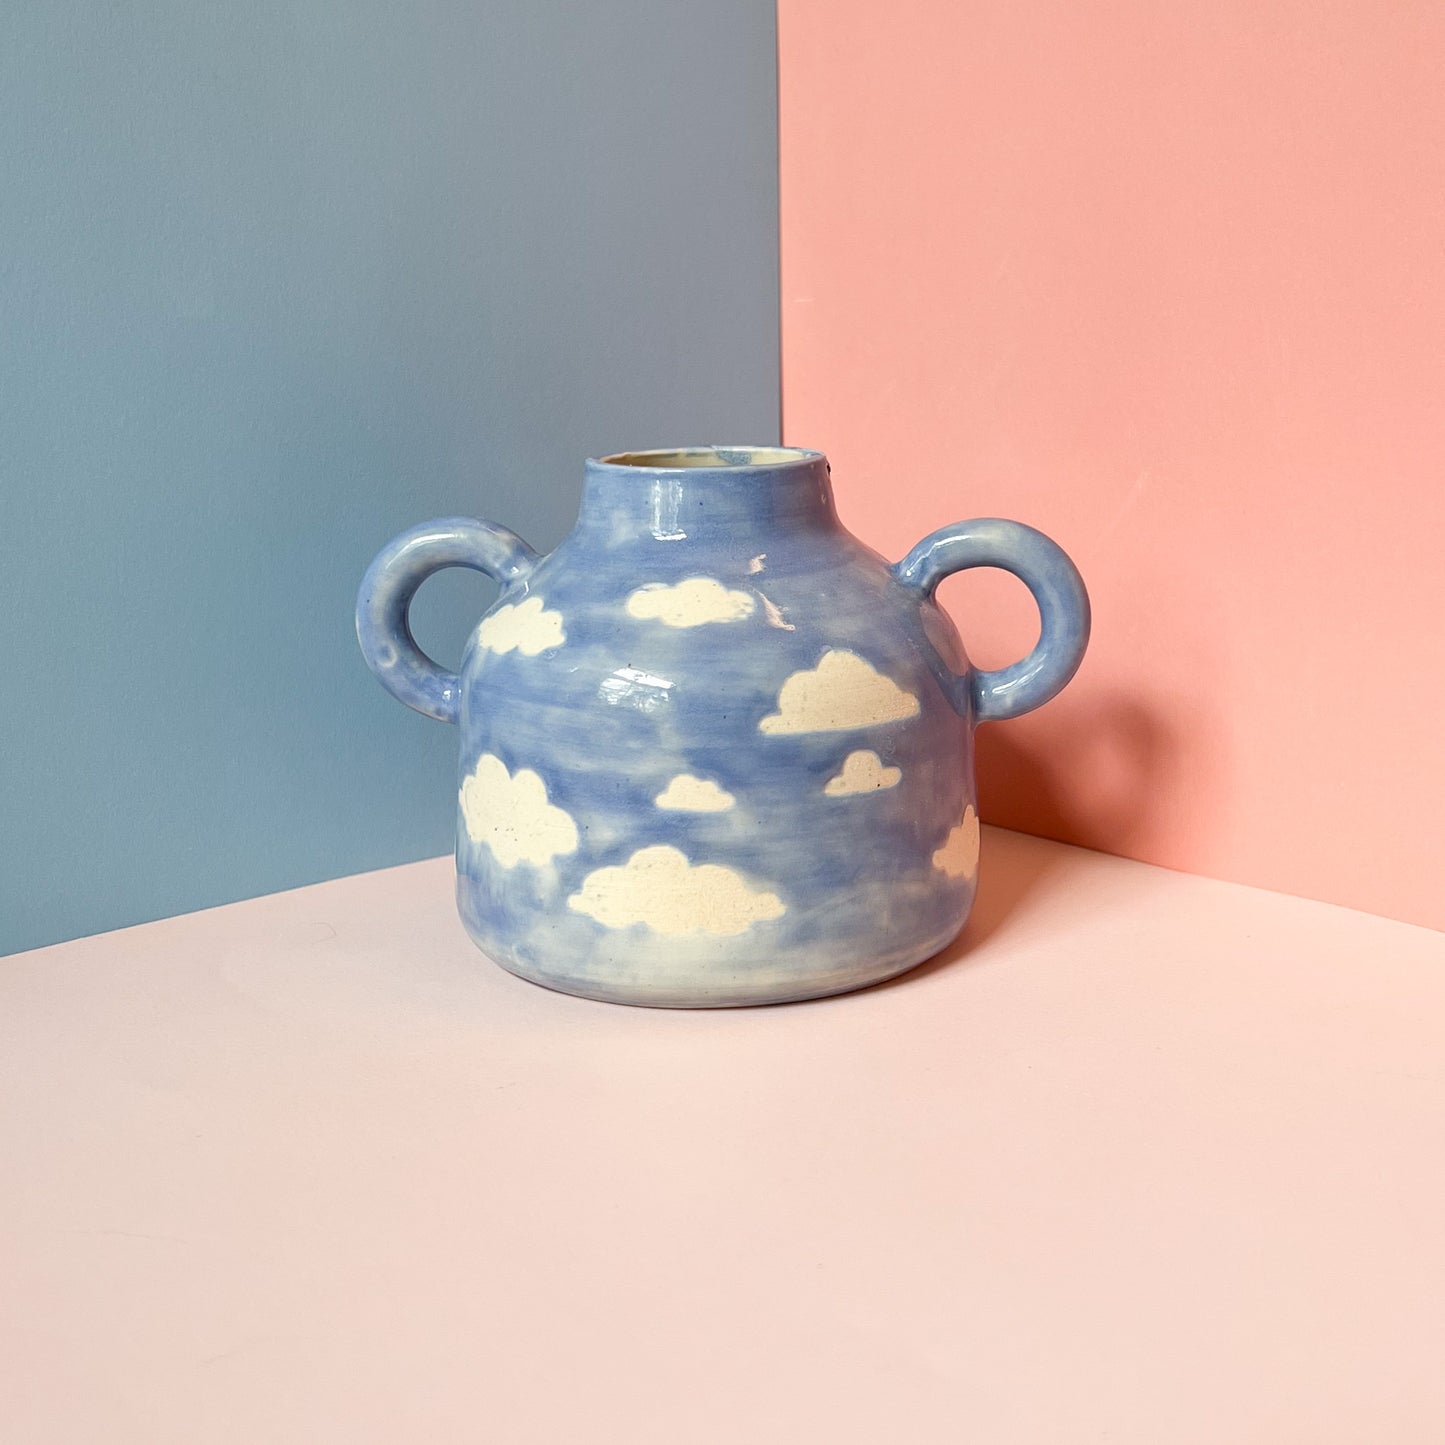 Seconds cloudy vase